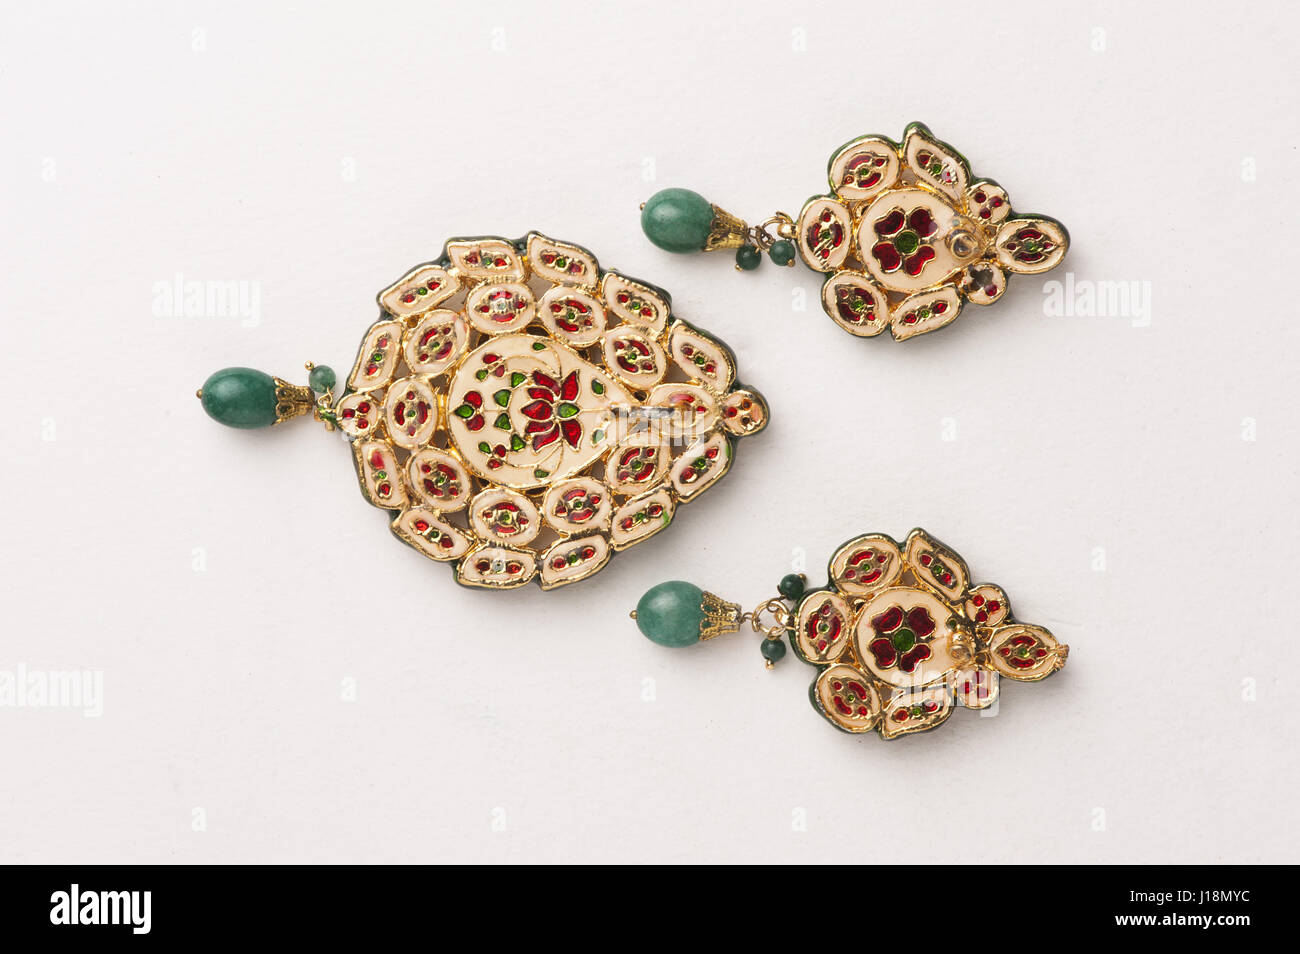 Earrings and pendant, india, asia Stock Photo